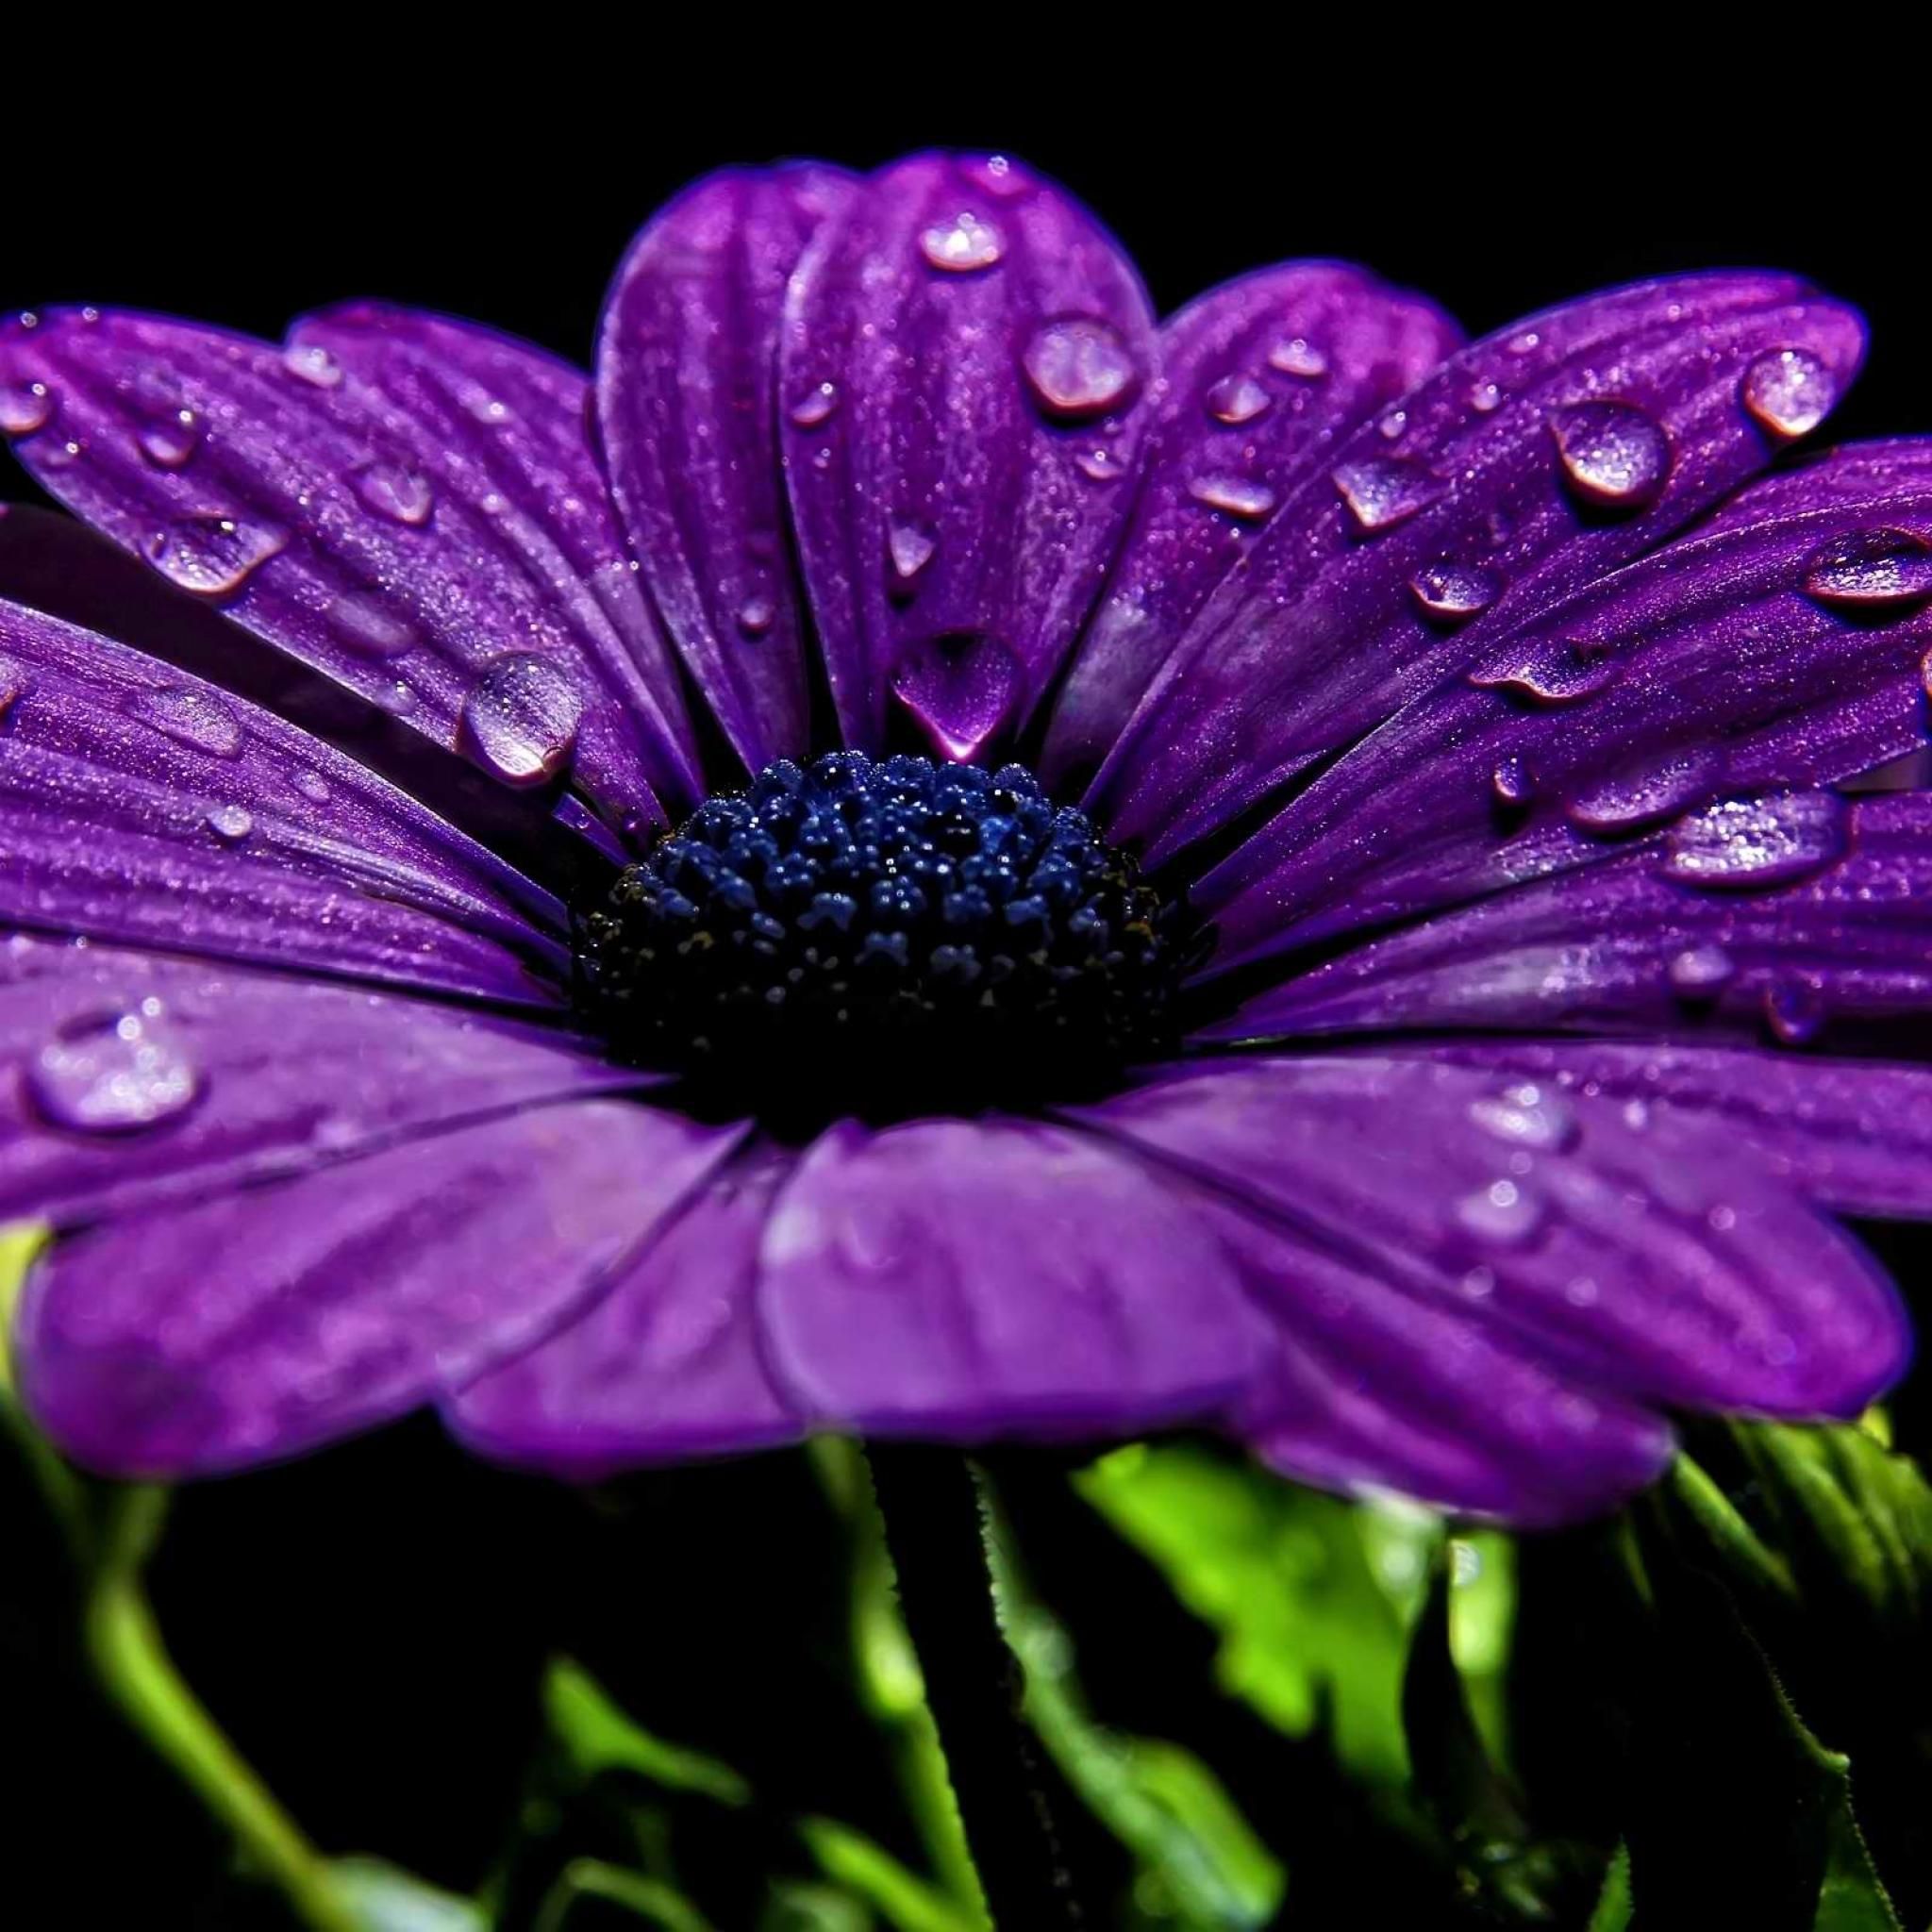 purple nature photos - Google Search | PURPLE!!! | Pinterest ...